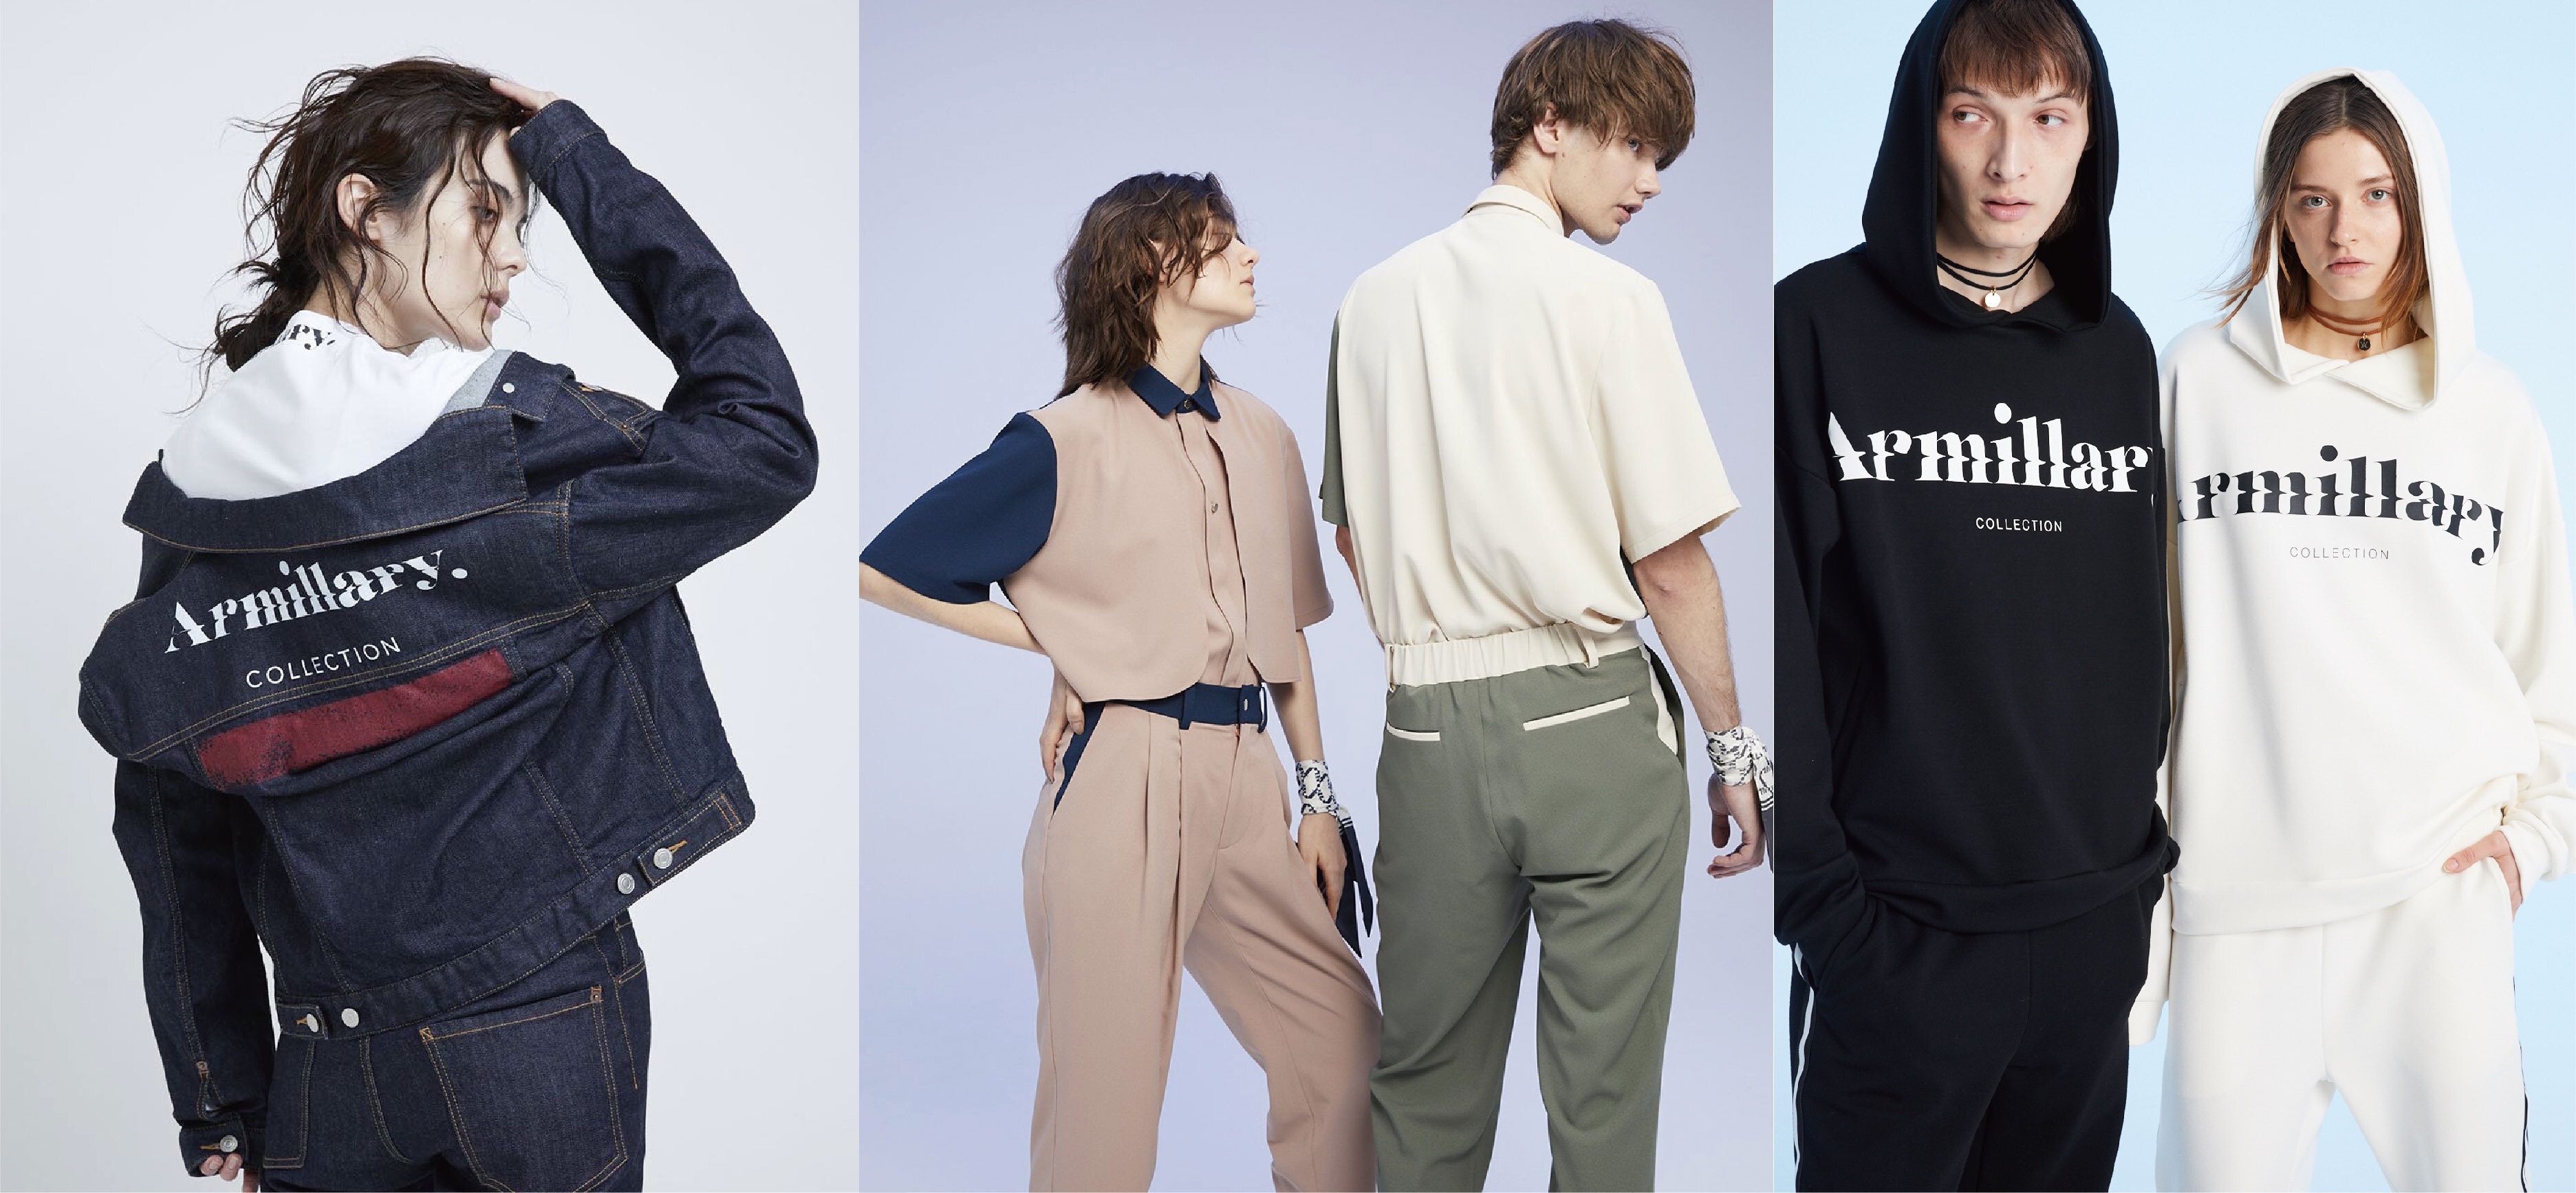 Shuta Sueyoshiがプロデュースするファッションブランドarmillary アーミラリ Apparel All Collection商品をlhp店舗にてpopup開催 Konnekt International Inc のプレスリリース